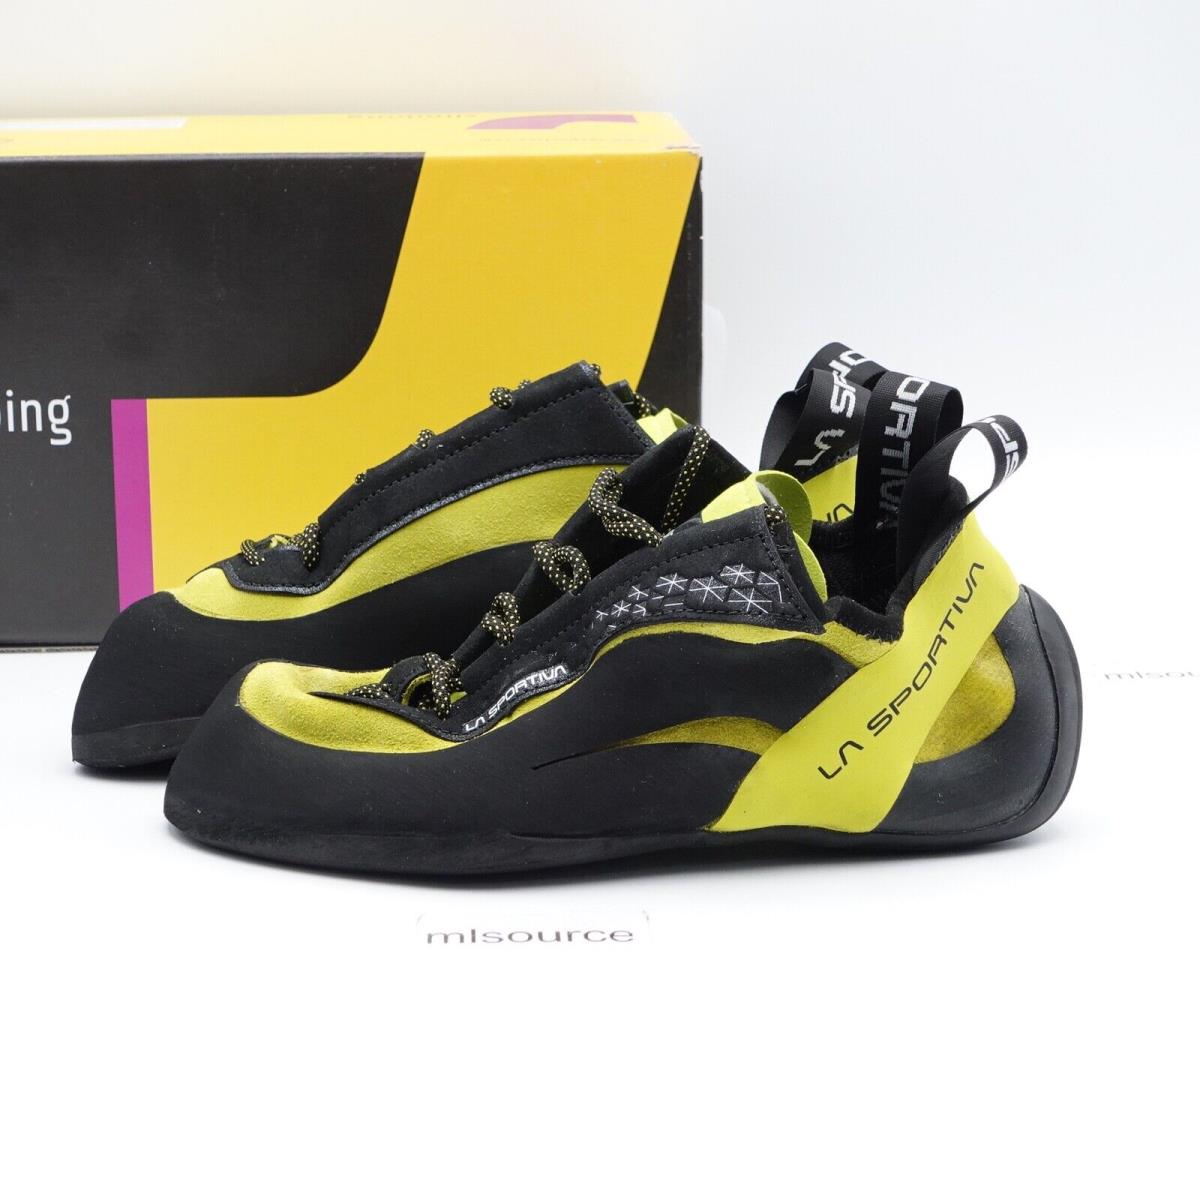 Size 8 / 39.5 EU Women`s La Sportiva Miura Climbing Shoes 20J706706 Lime